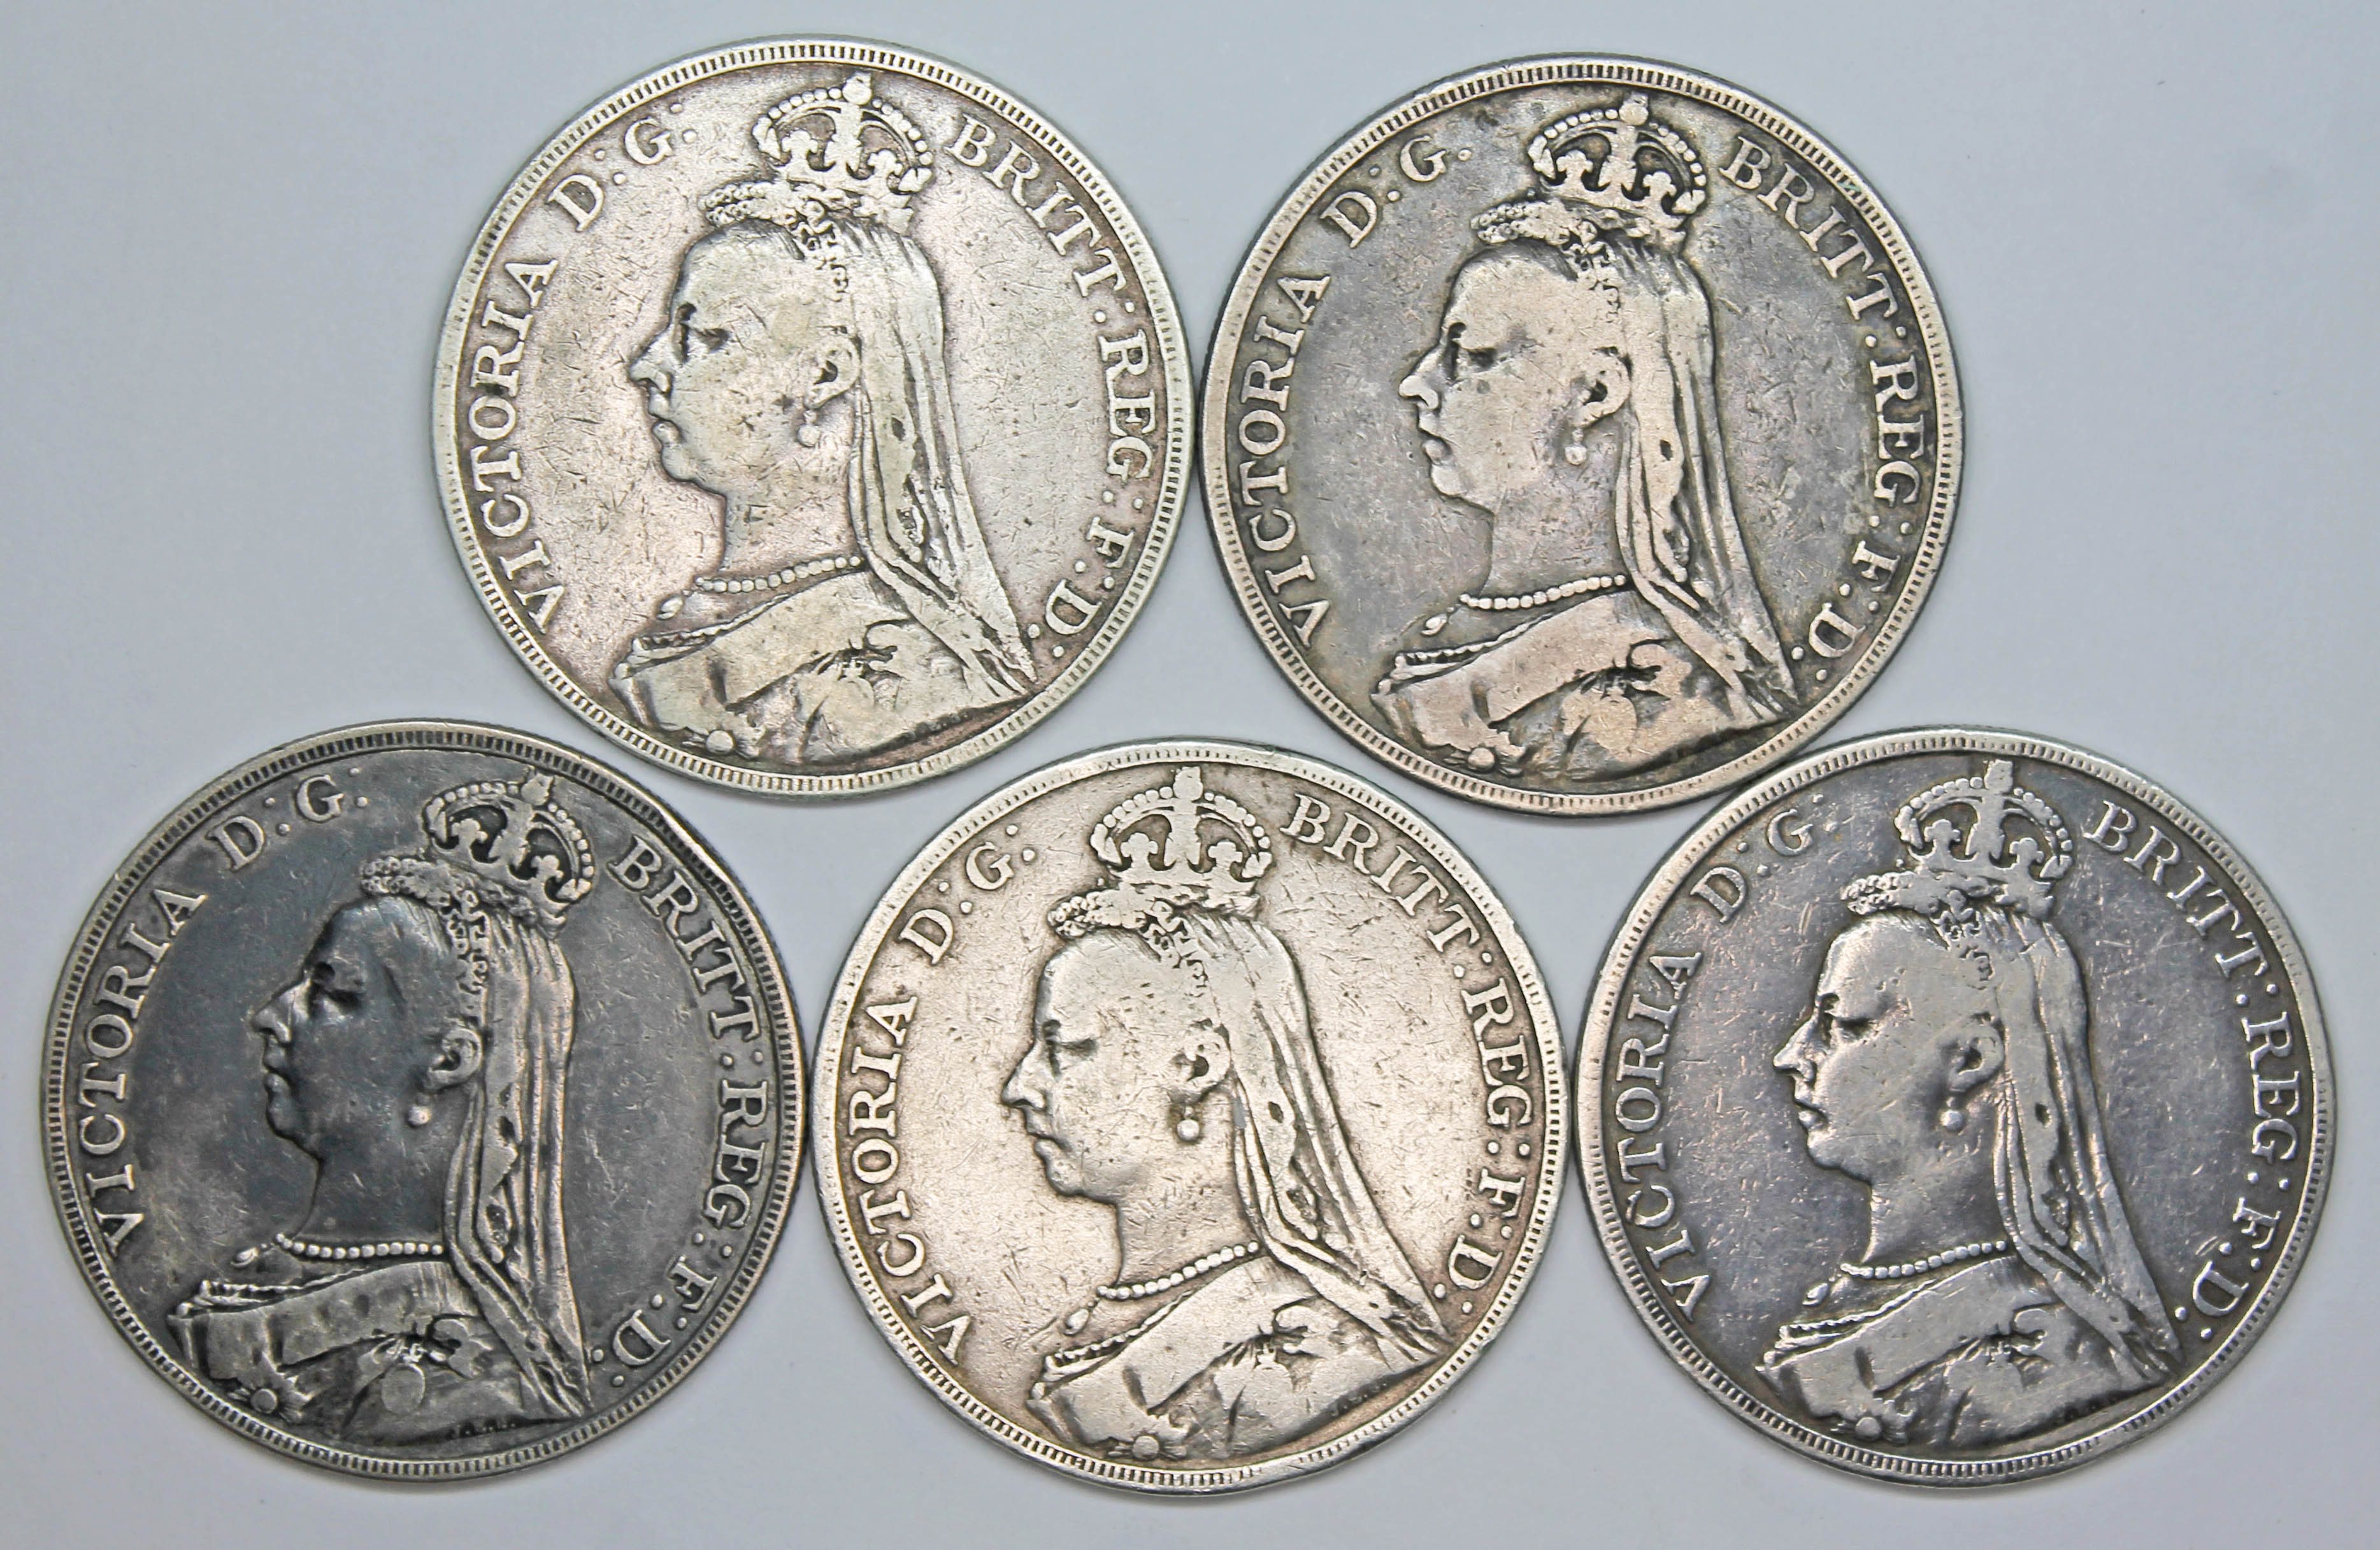 Victoria (1837-1901), five crowns, 1889.